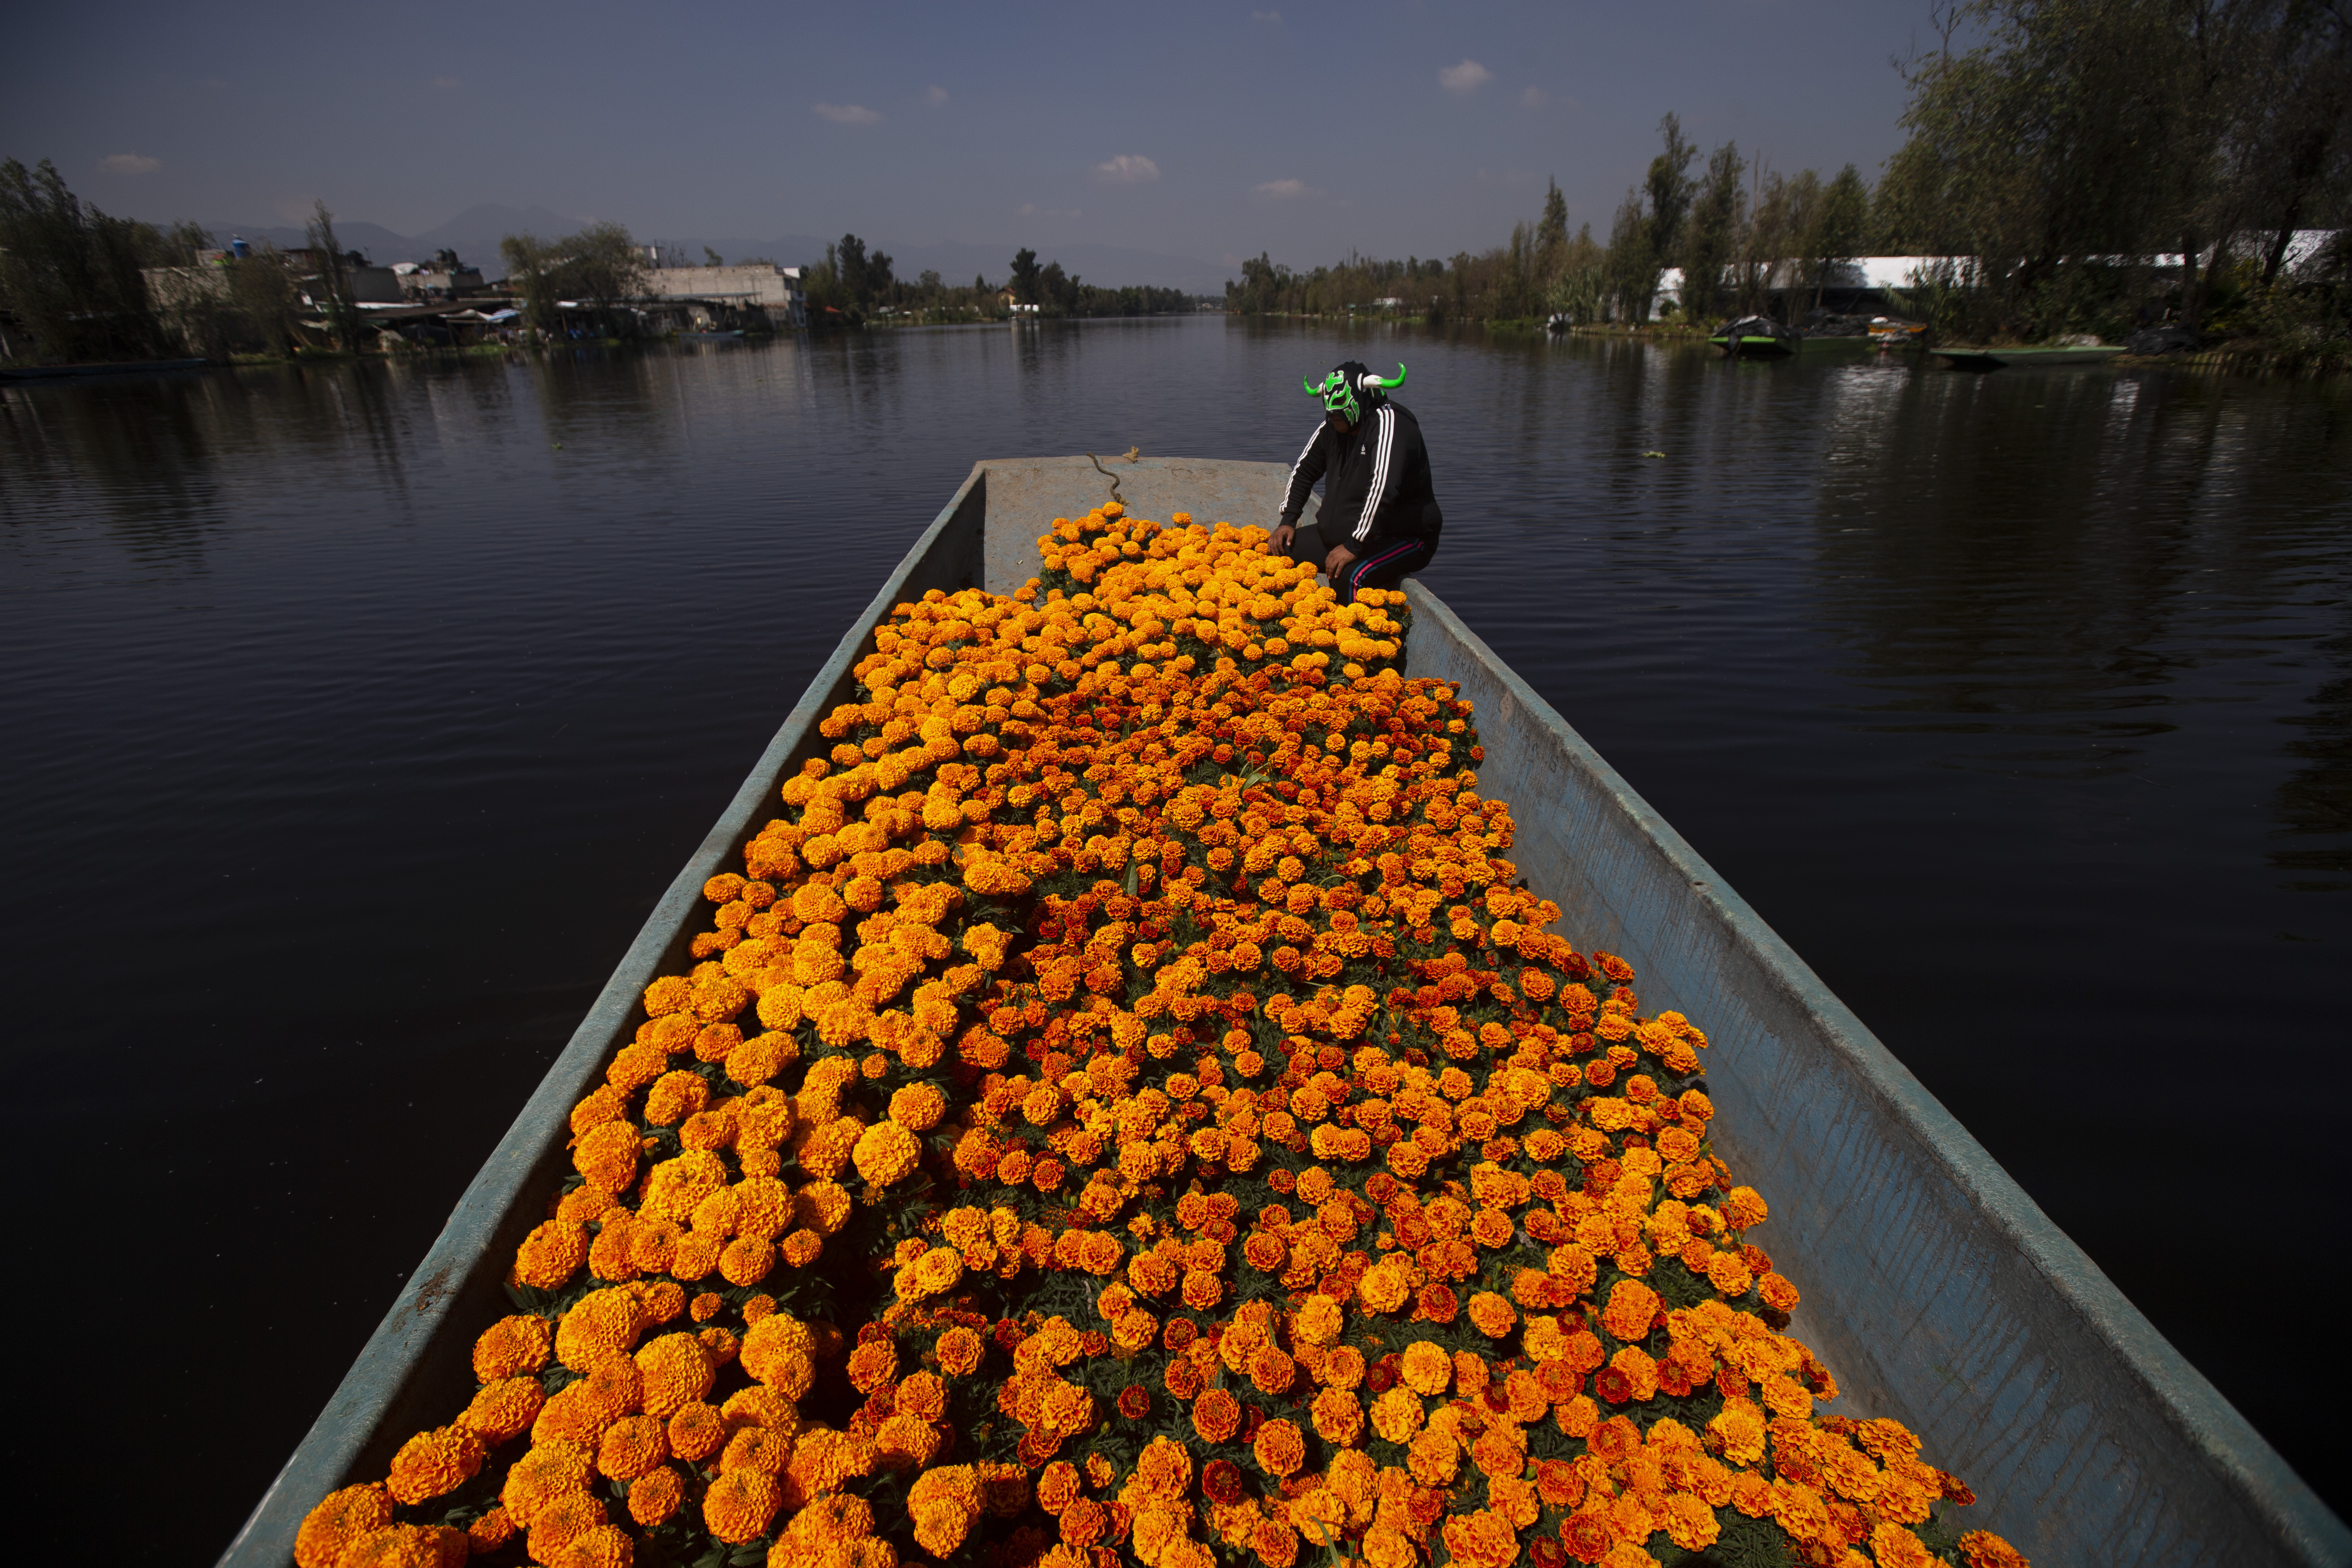 A wrestler on a boat full of flowers.